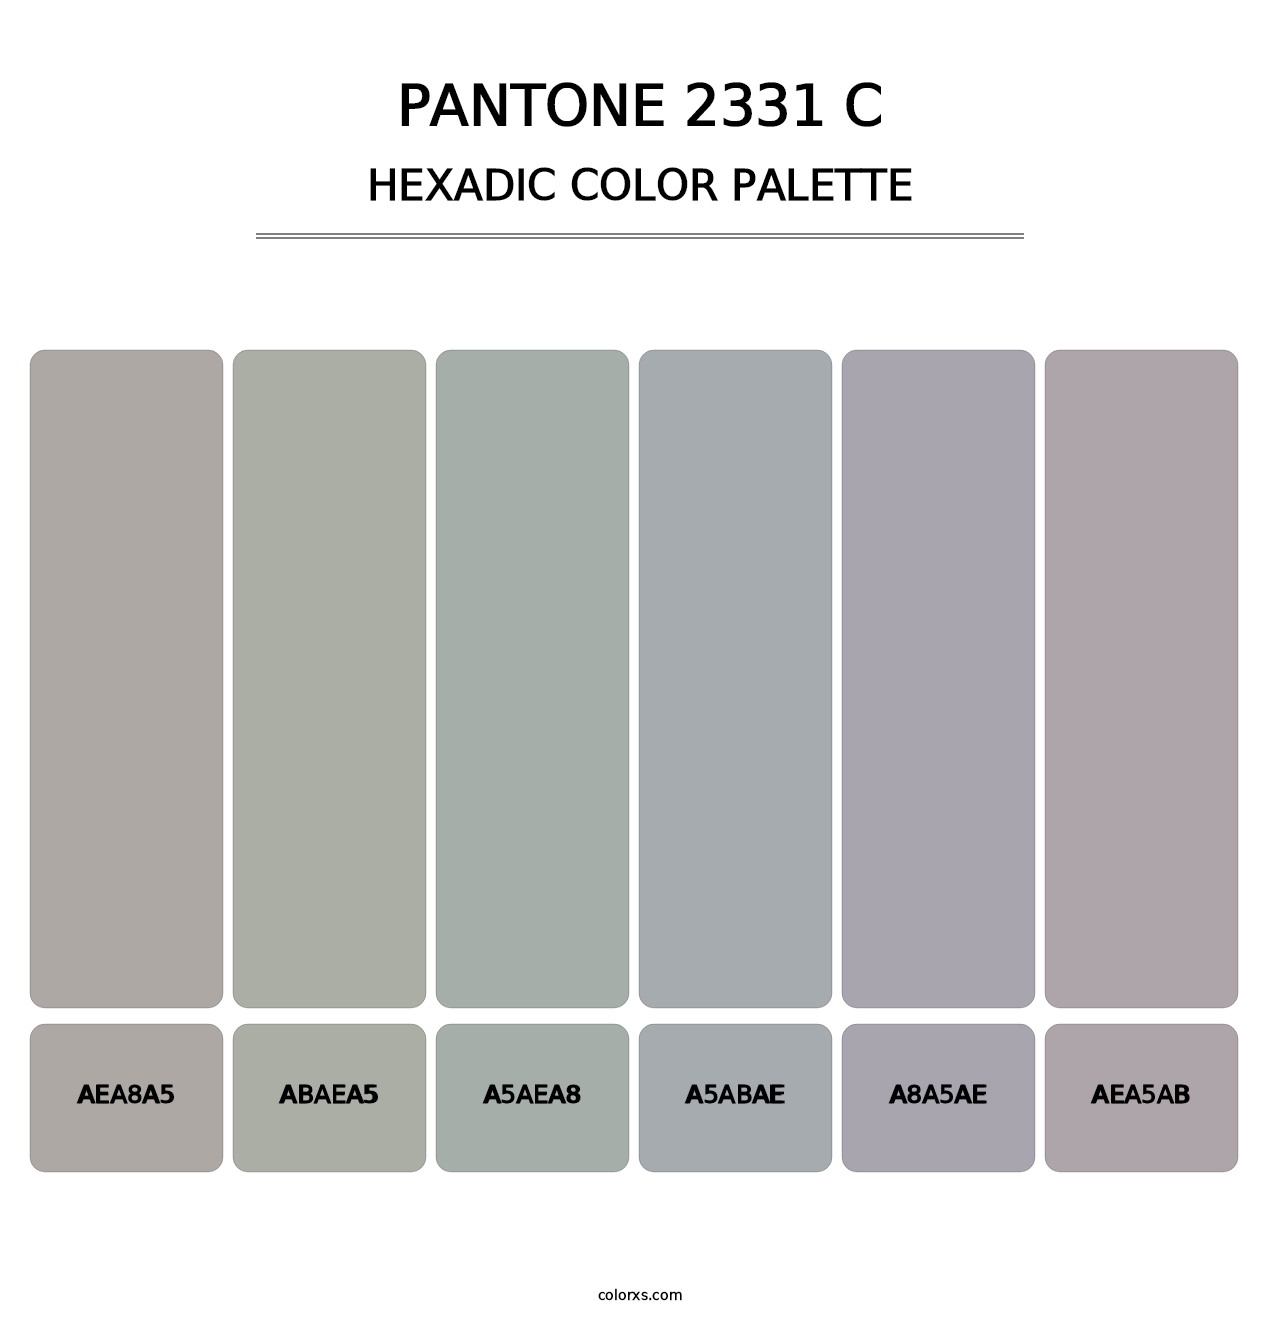 PANTONE 2331 C - Hexadic Color Palette